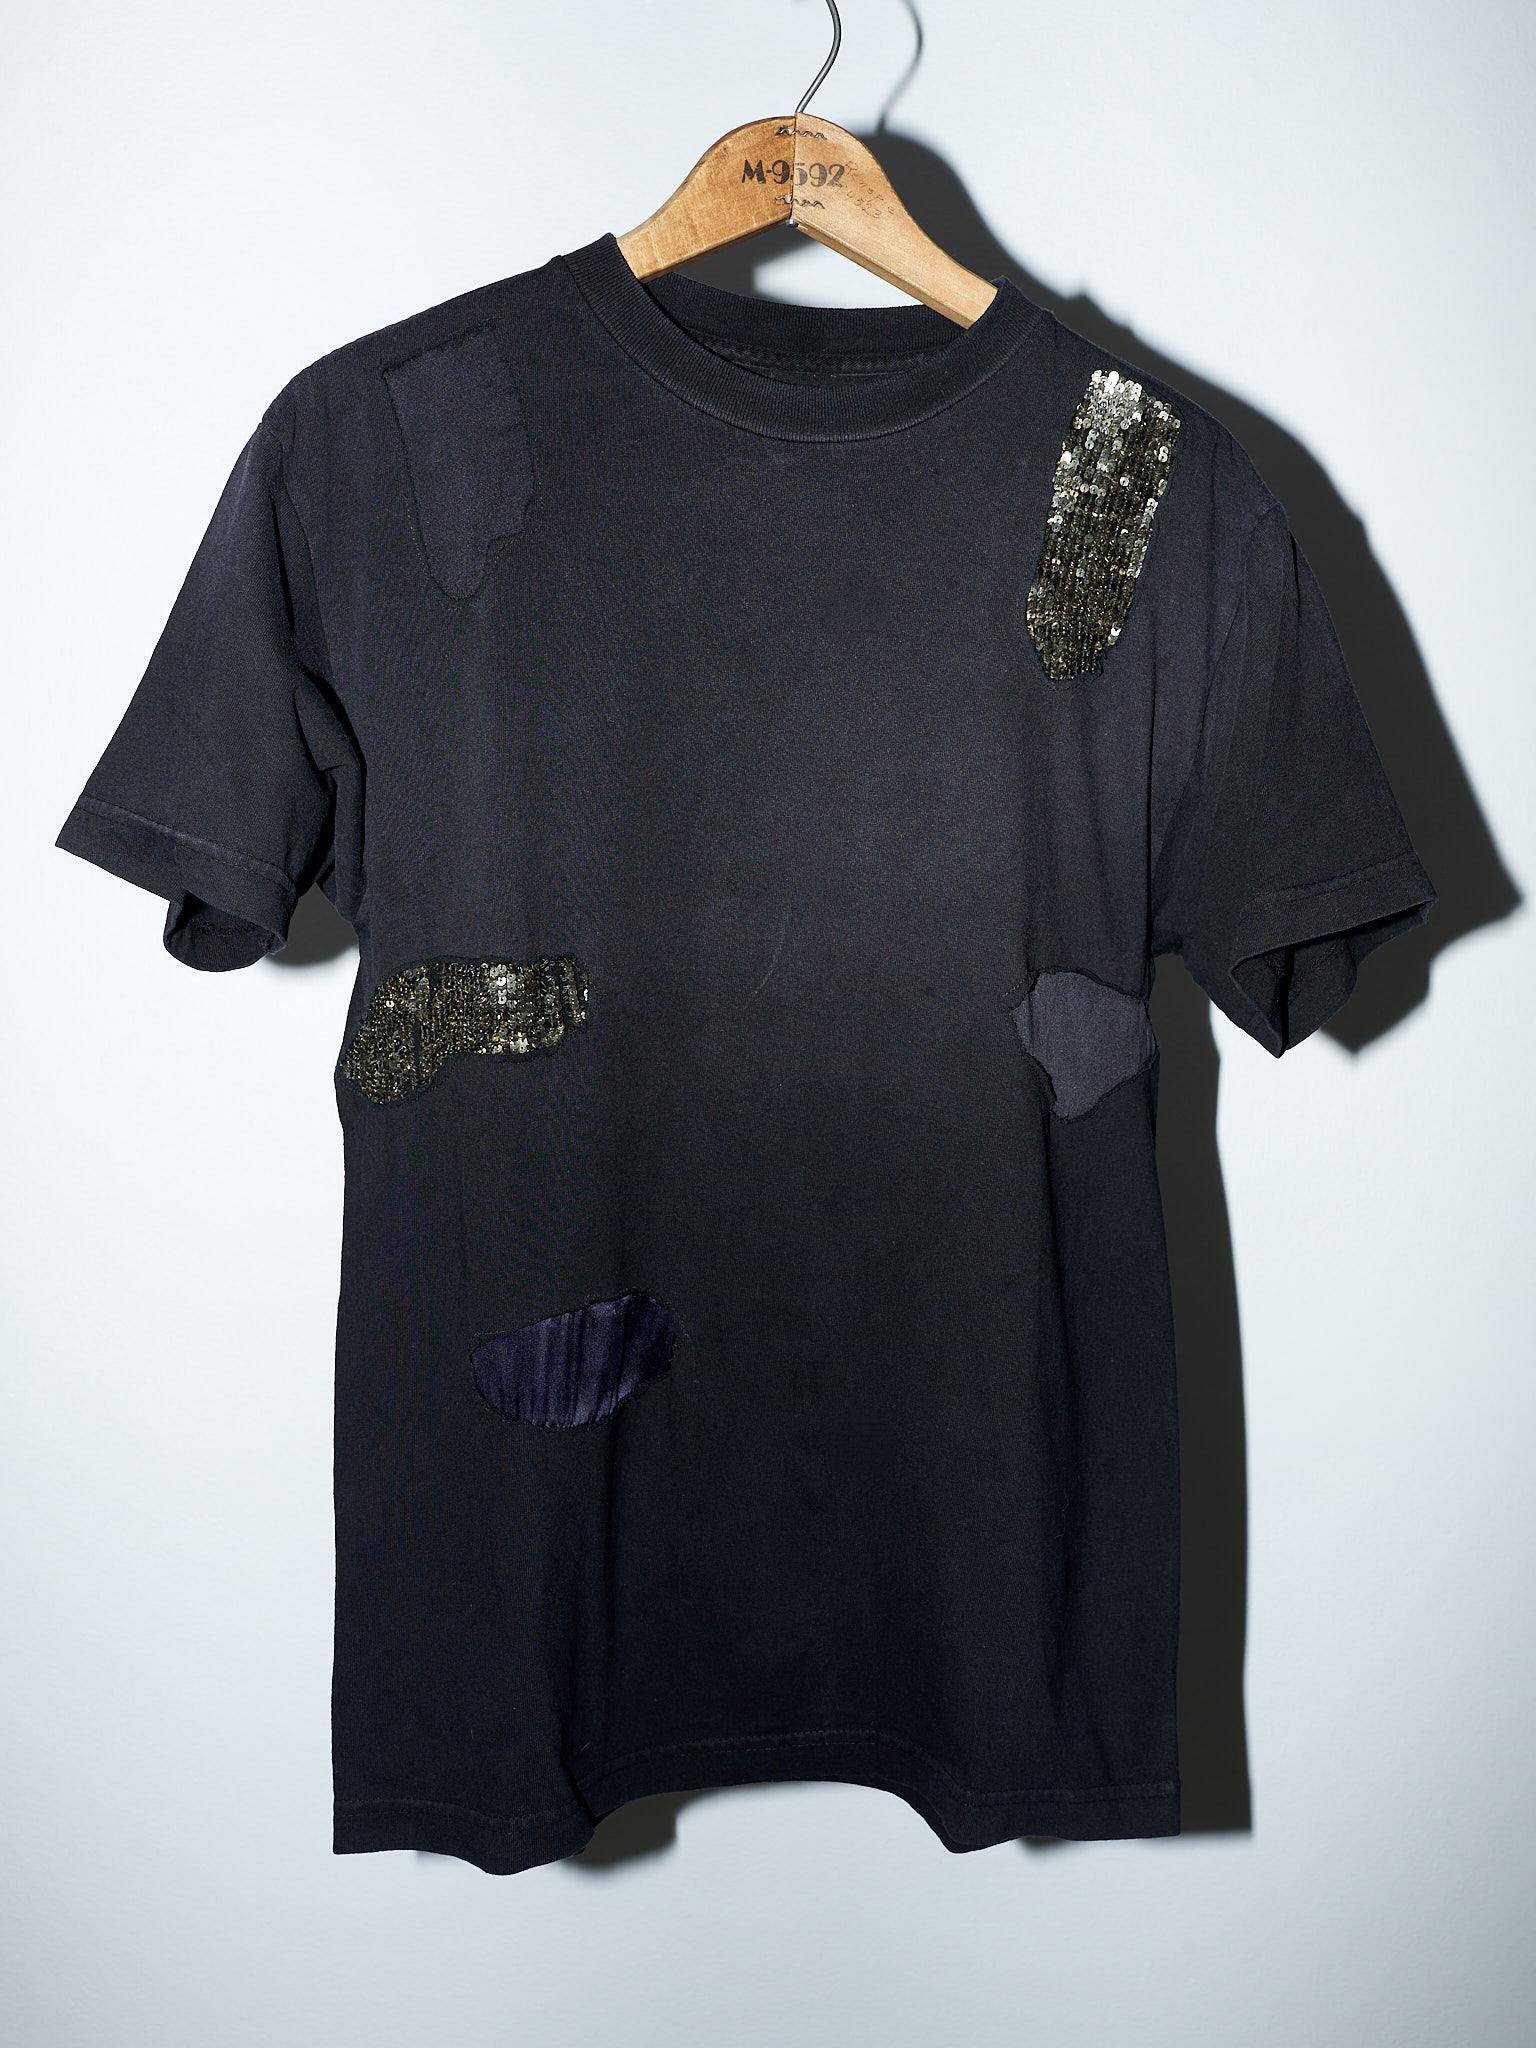 J Dauphin Black T-Shirt Embellished  Patch Work Sequin Silk Body Cotton  13